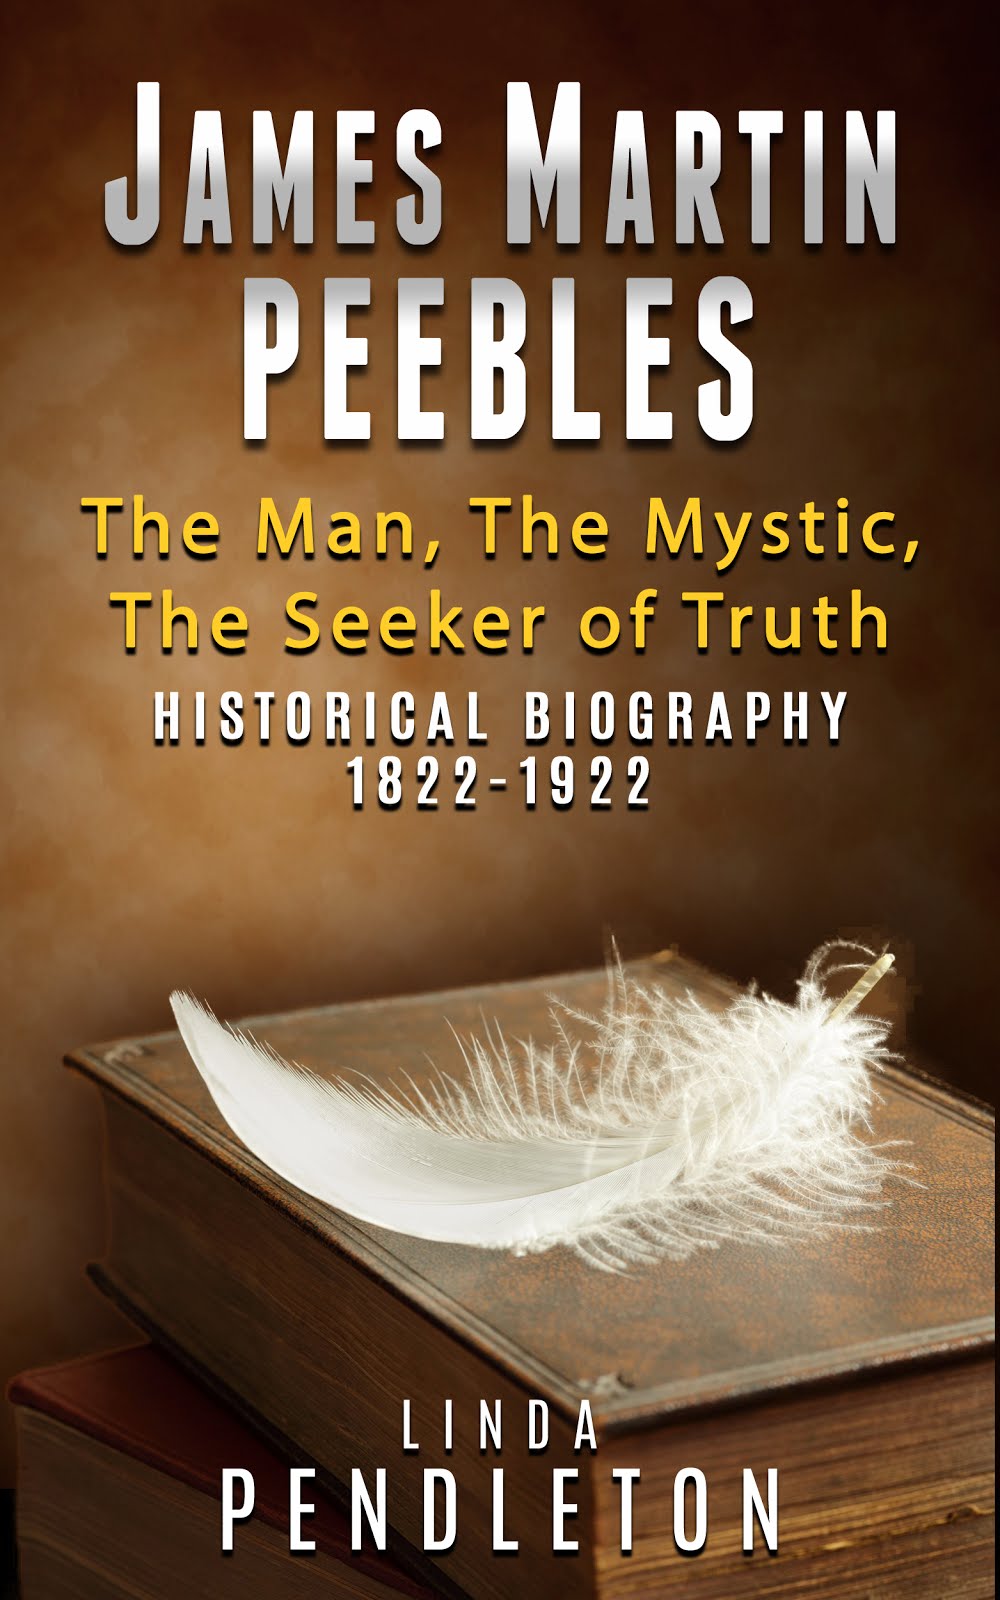 James Martin Peebles, Historical Biography